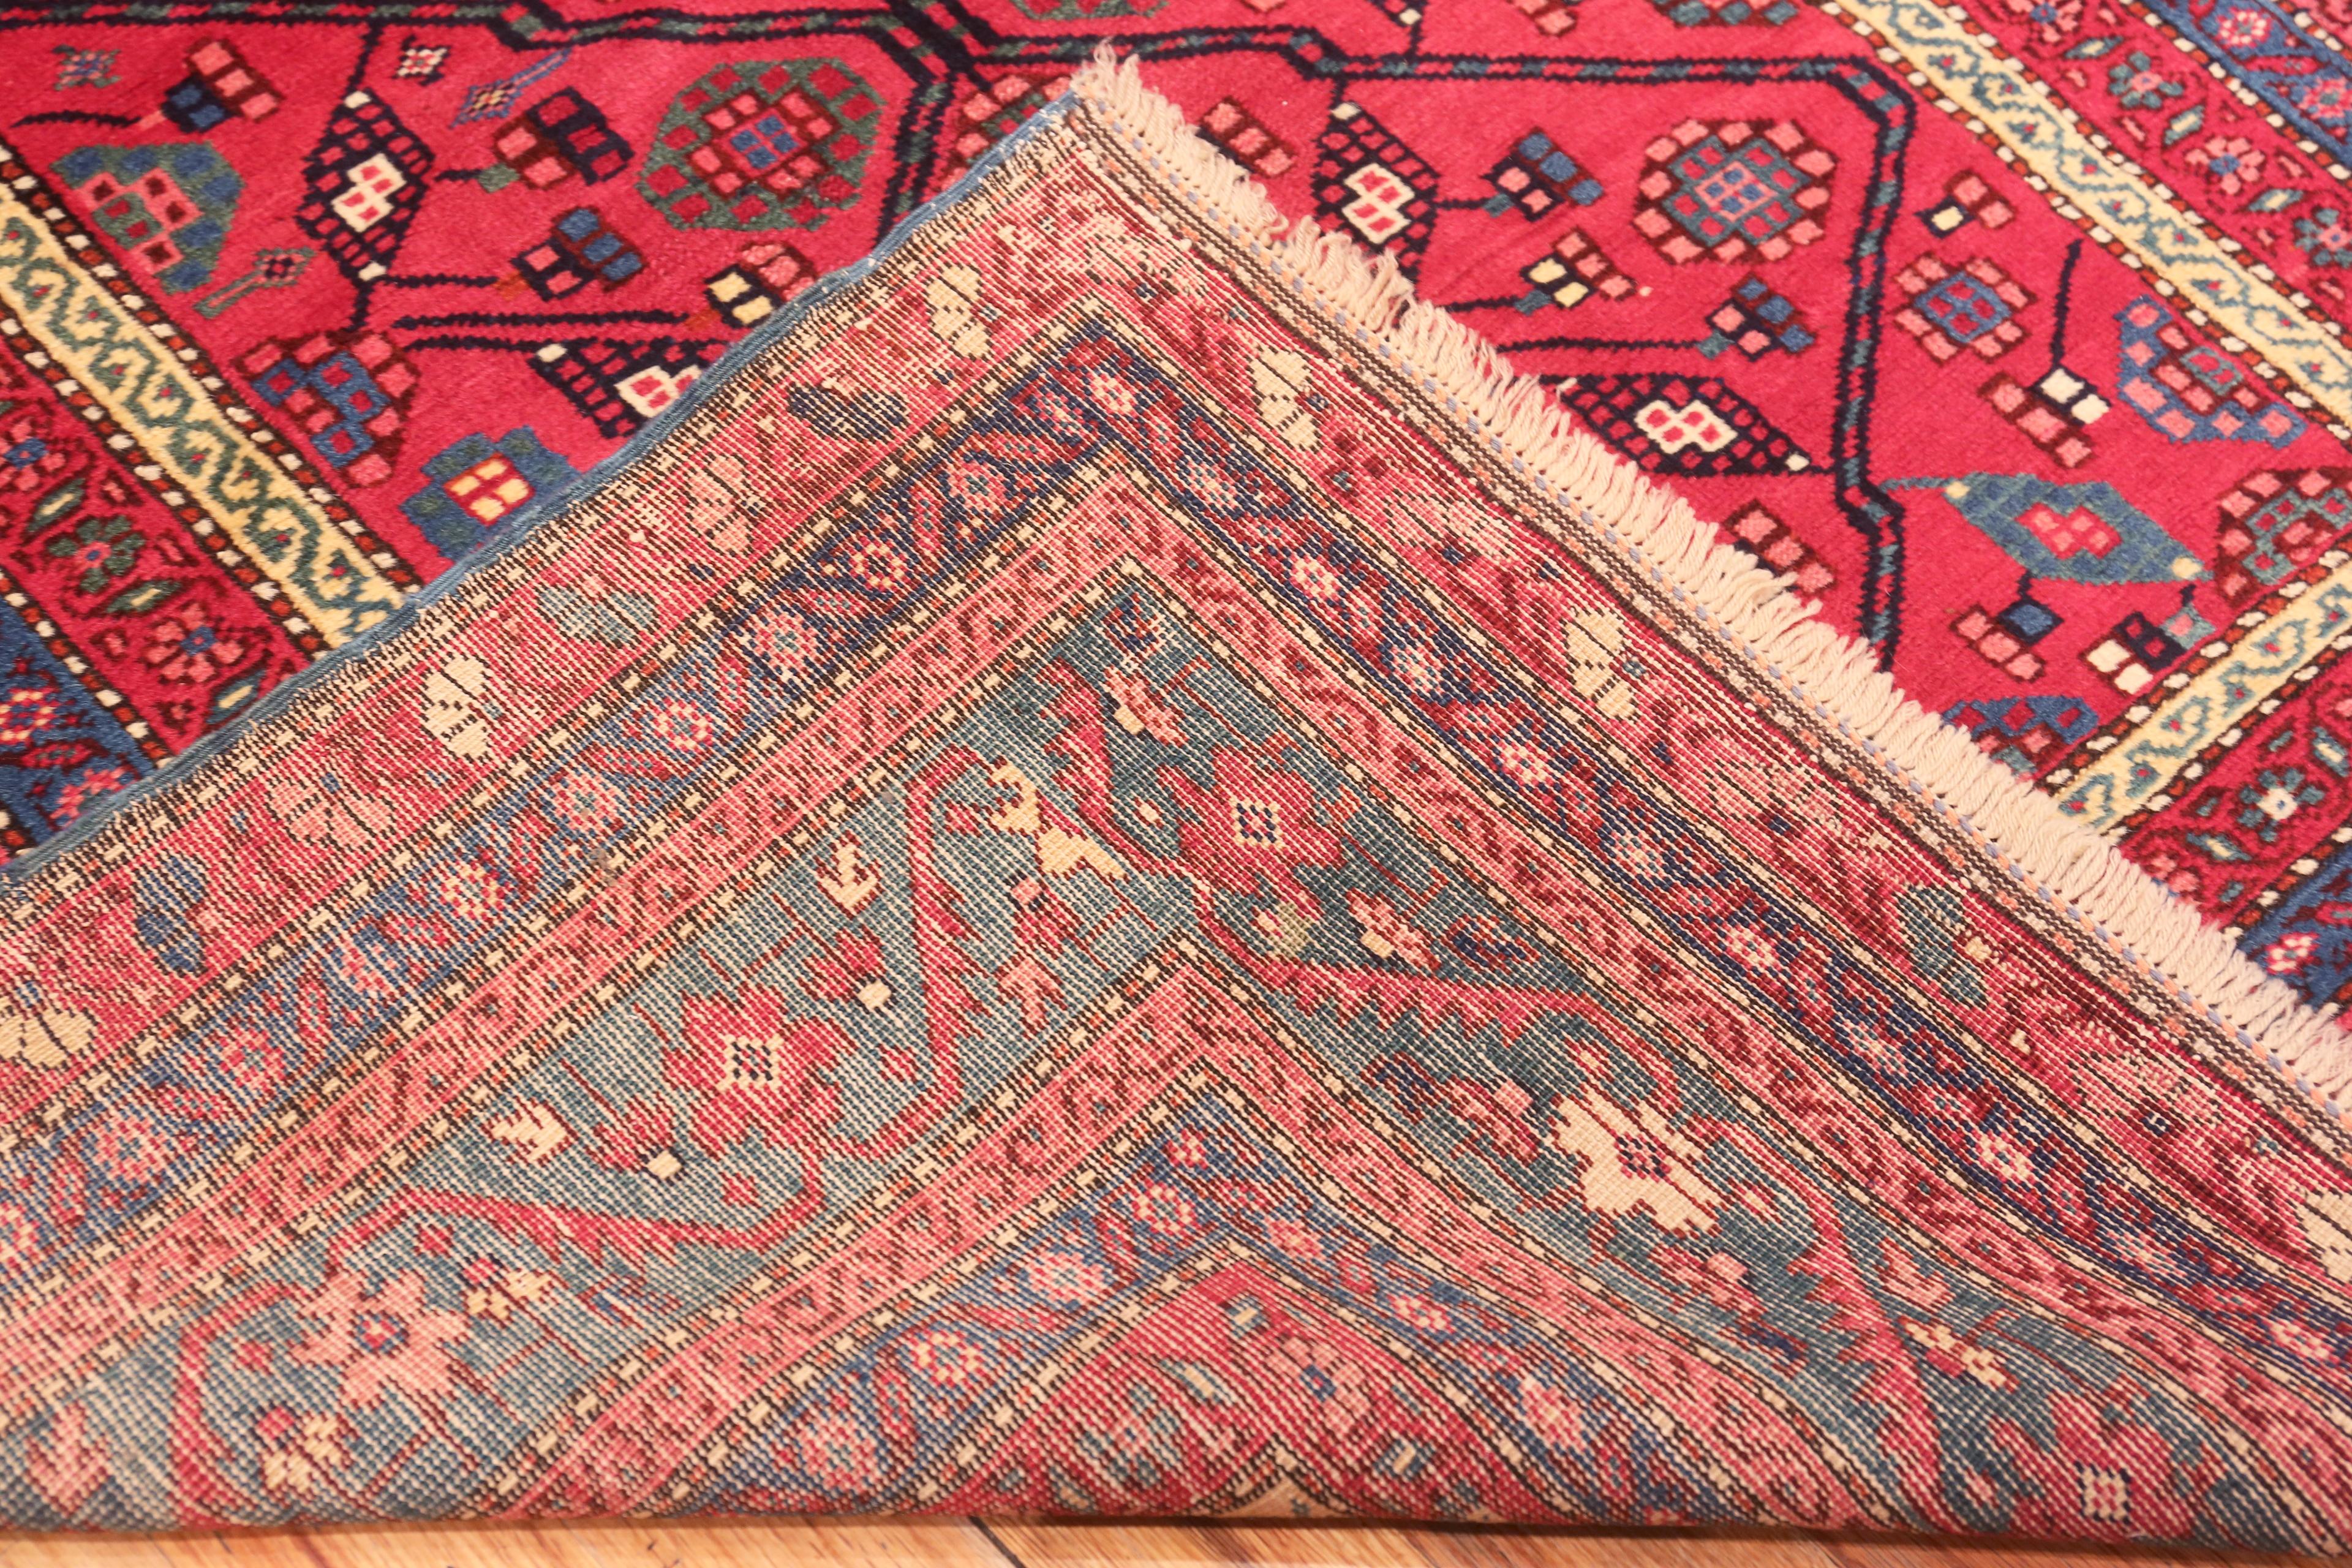 Fascinating Antique Caucasian Karabagh Rug, Origin: Caucasian Rugs, Circa date: 1920. Size: 4 ft 8 in x 11 ft (1.42 m x 3.35 m)

